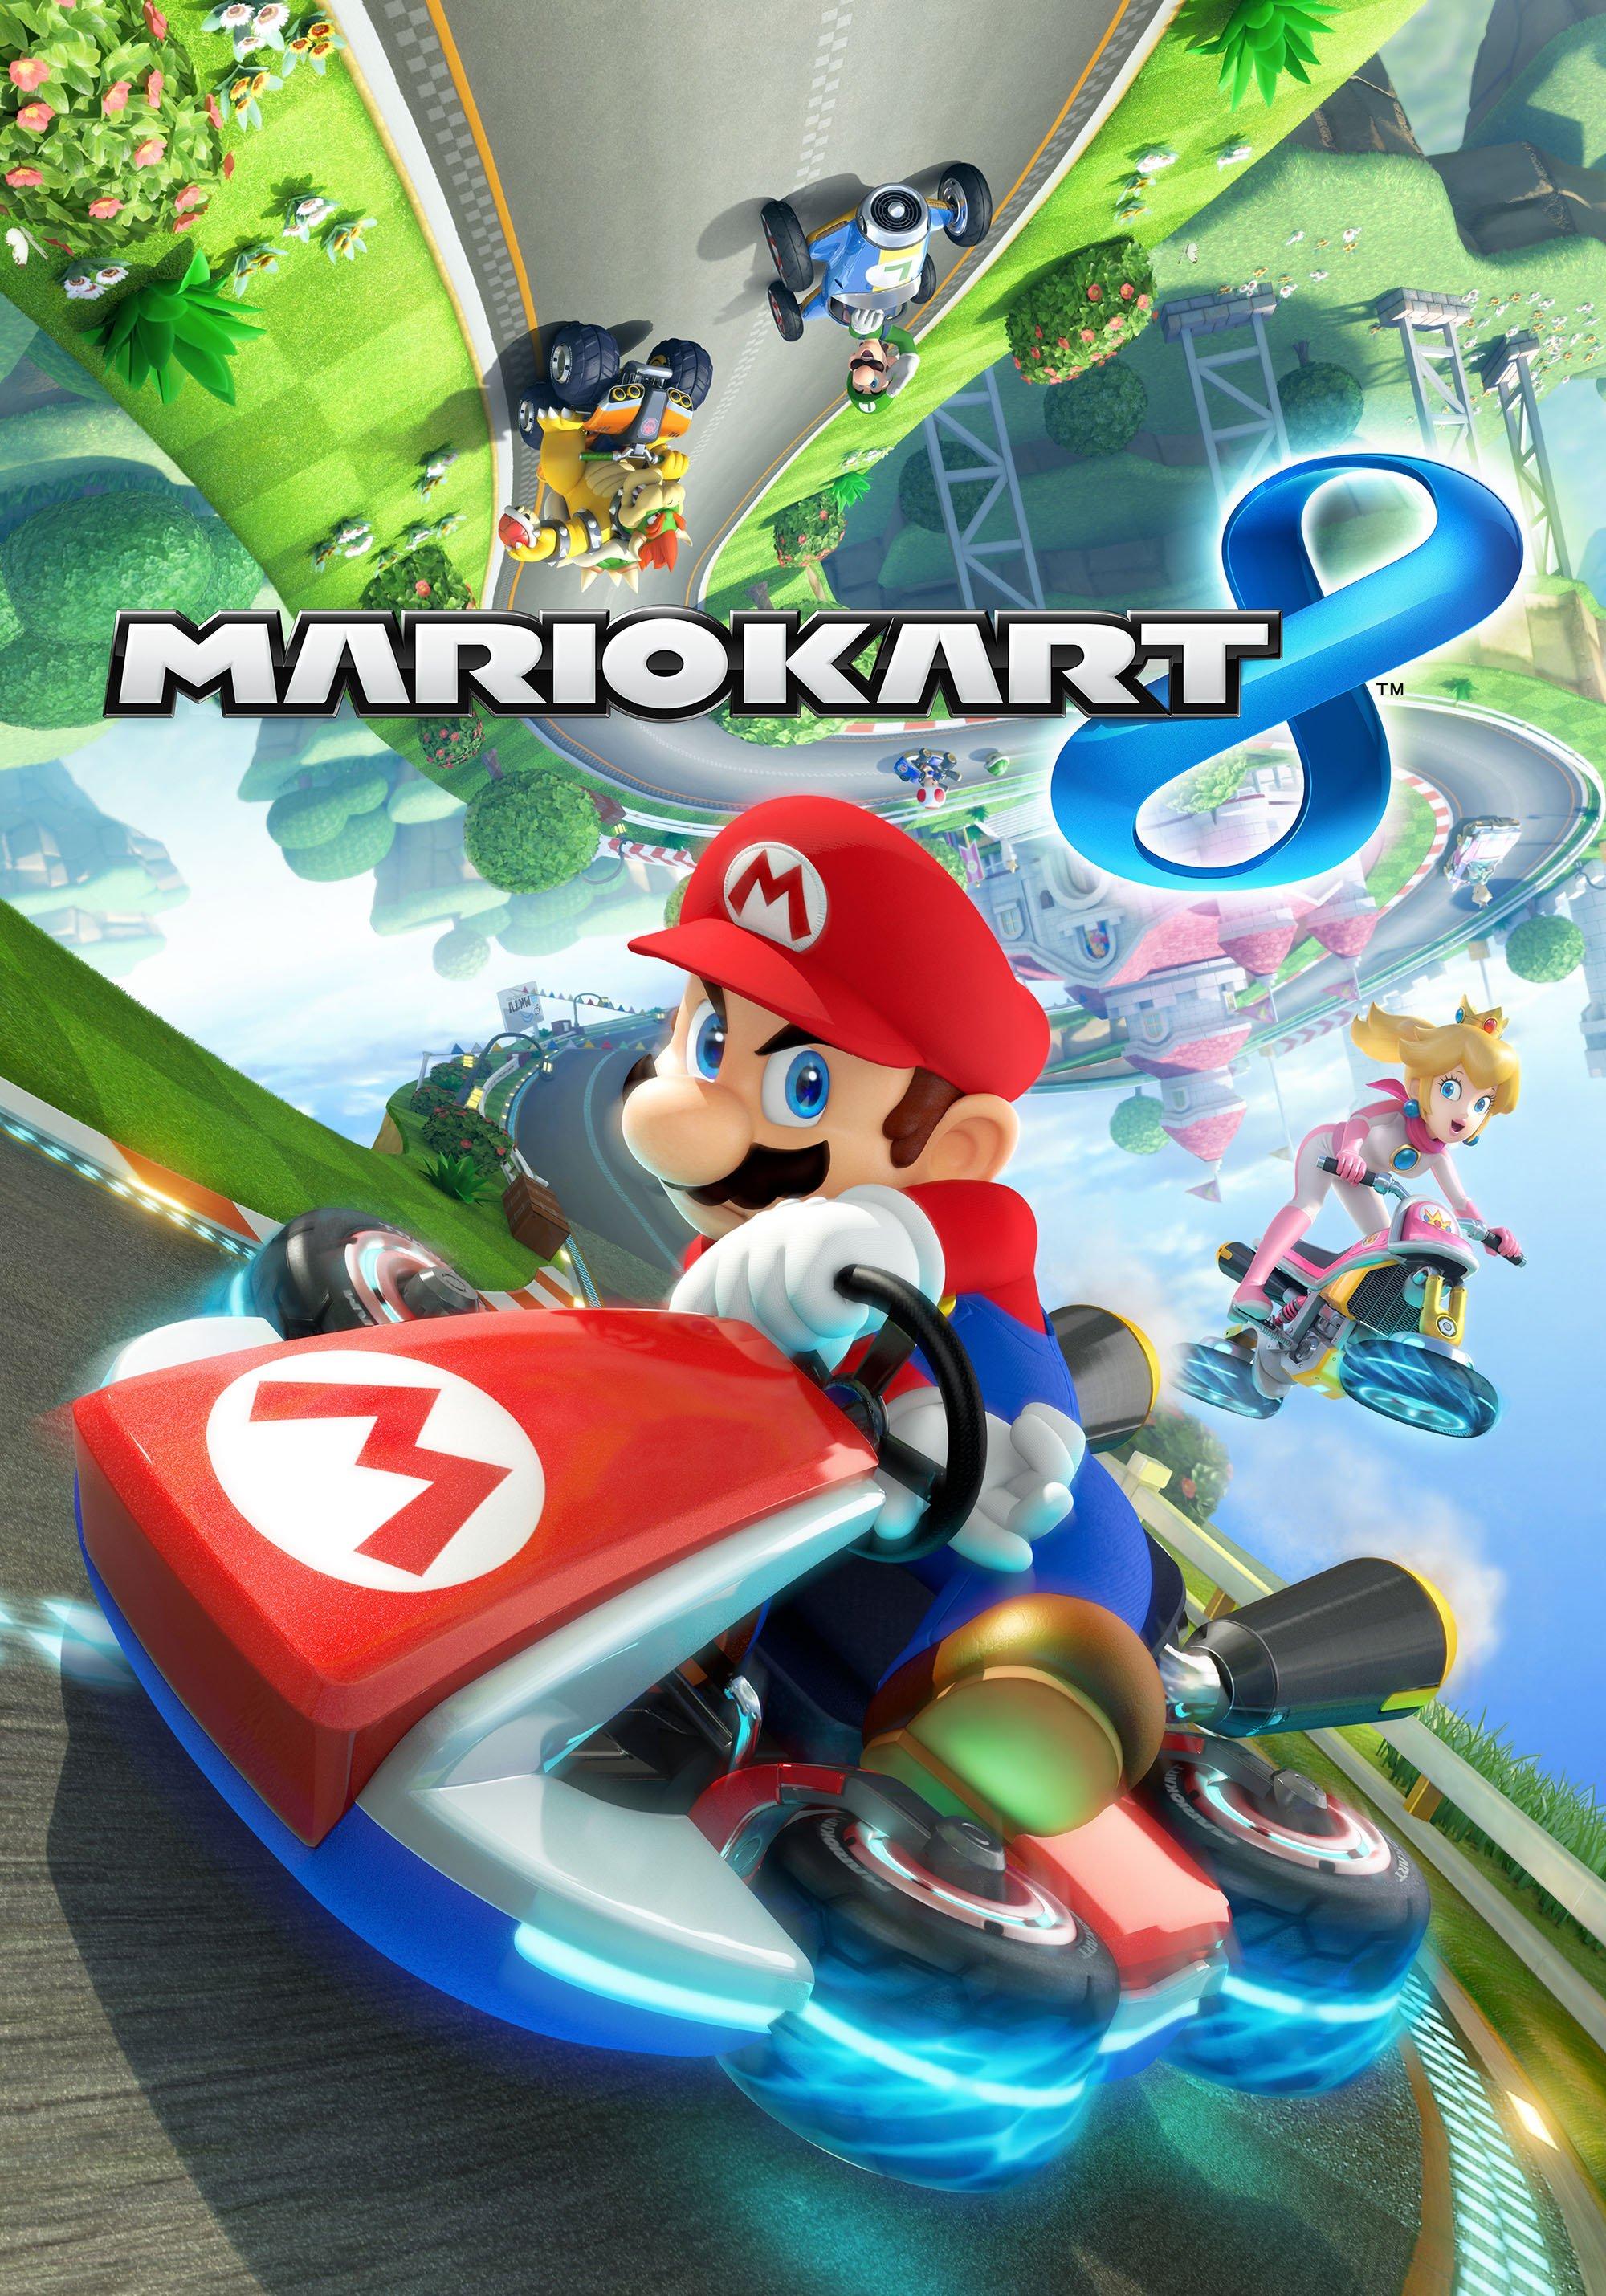 Nintendo Wii U Mario Kart 8 Video Game - US